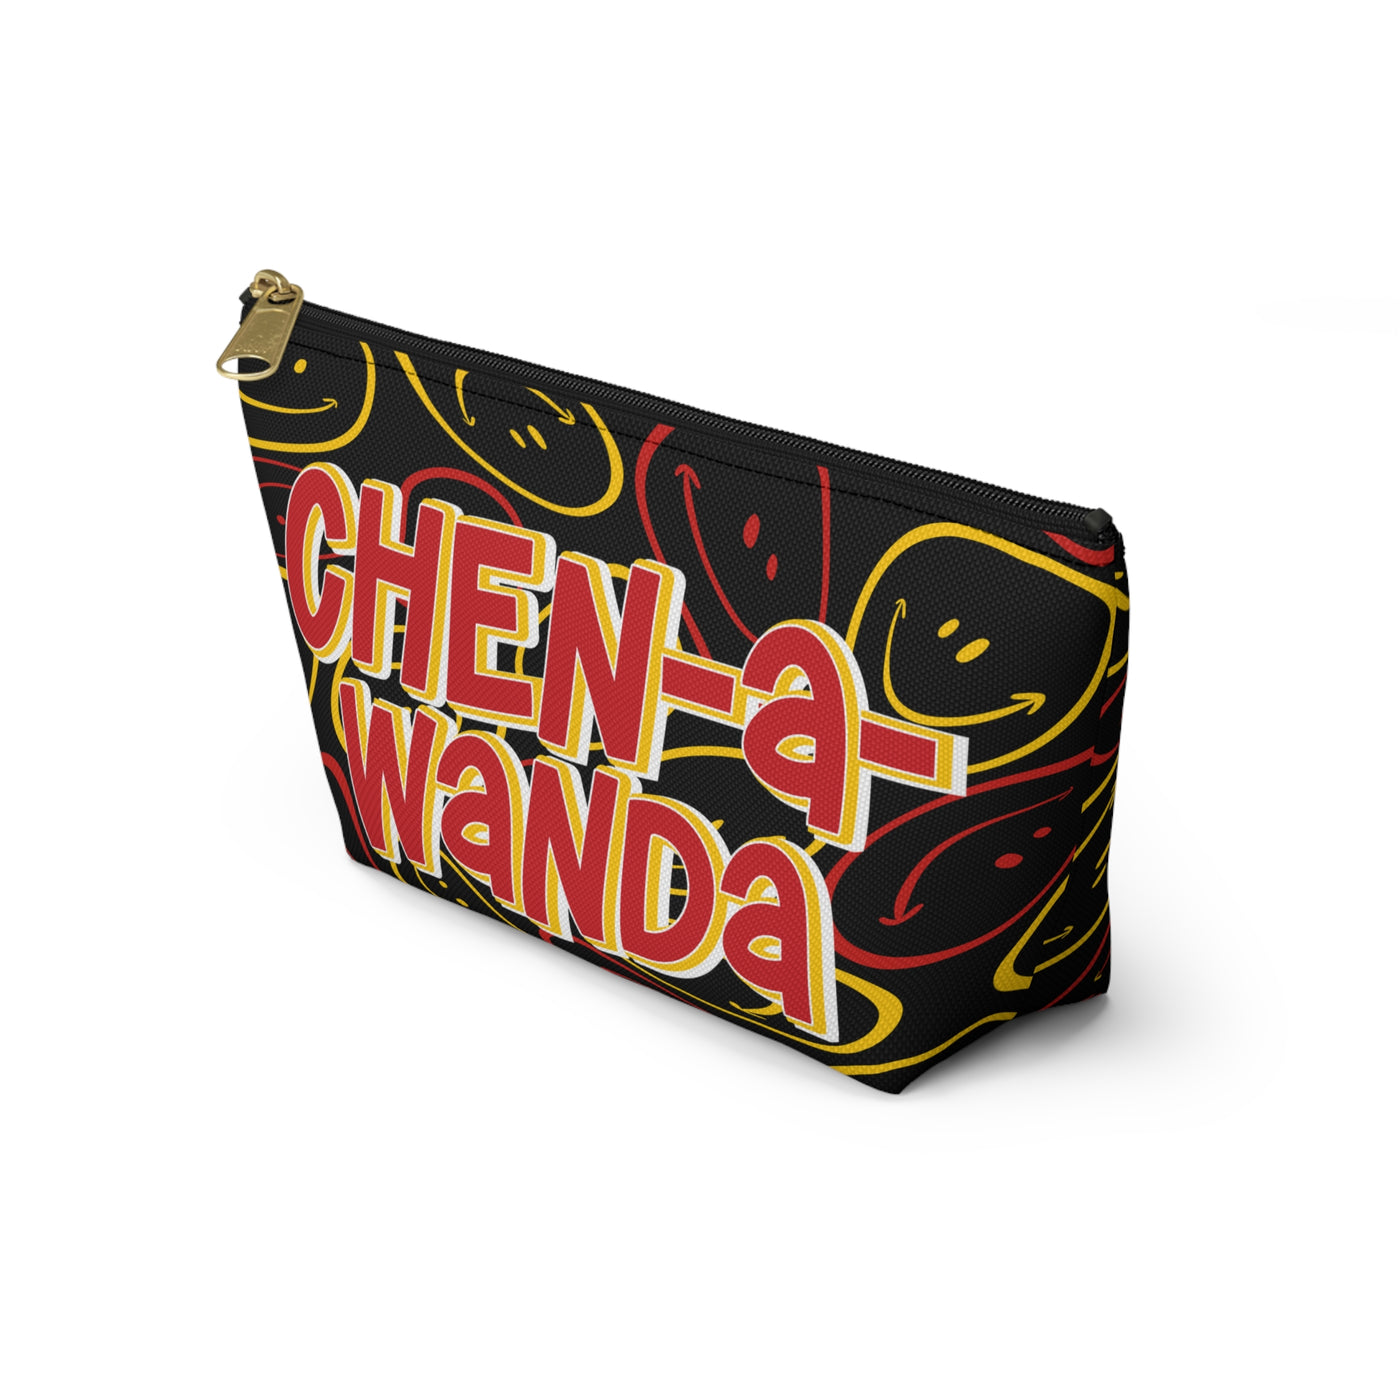 Chen-A-Wanda Camp Makeup Bag